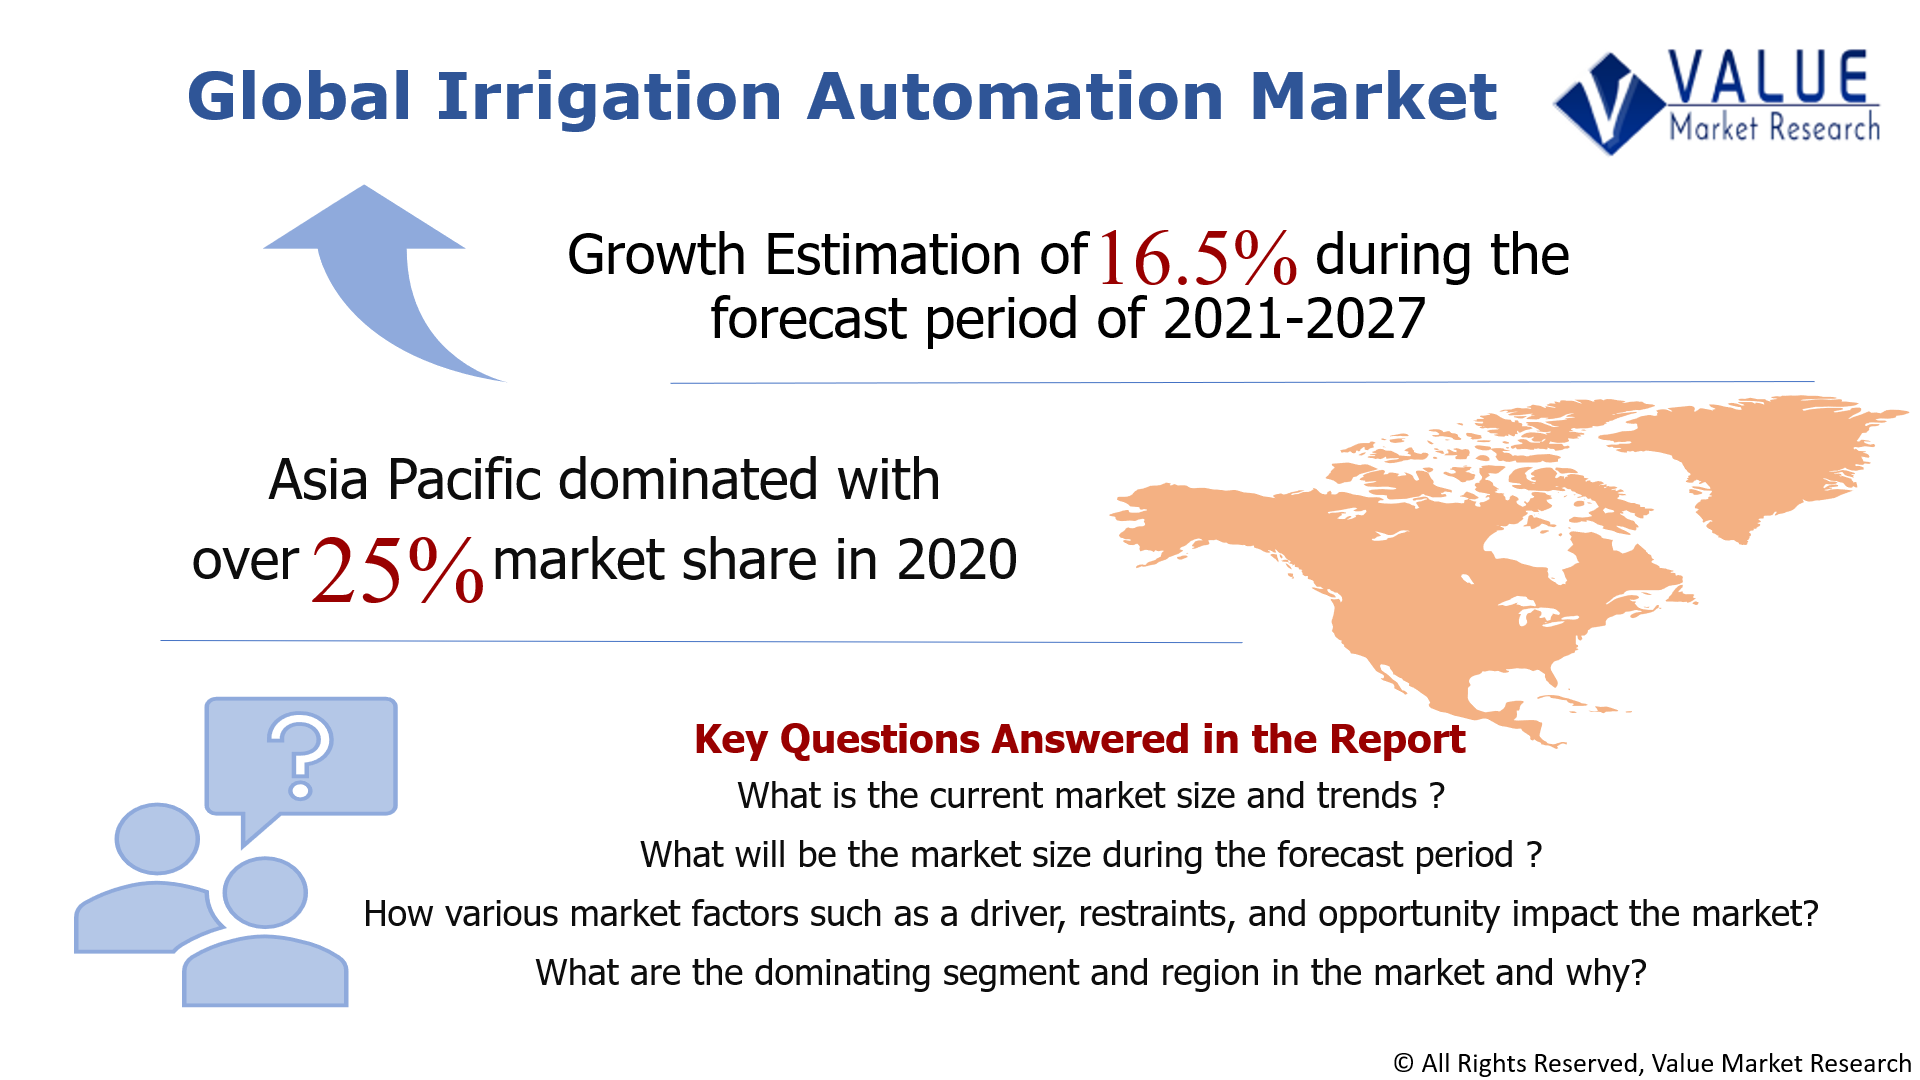 Global Irrigation Automation Market Share